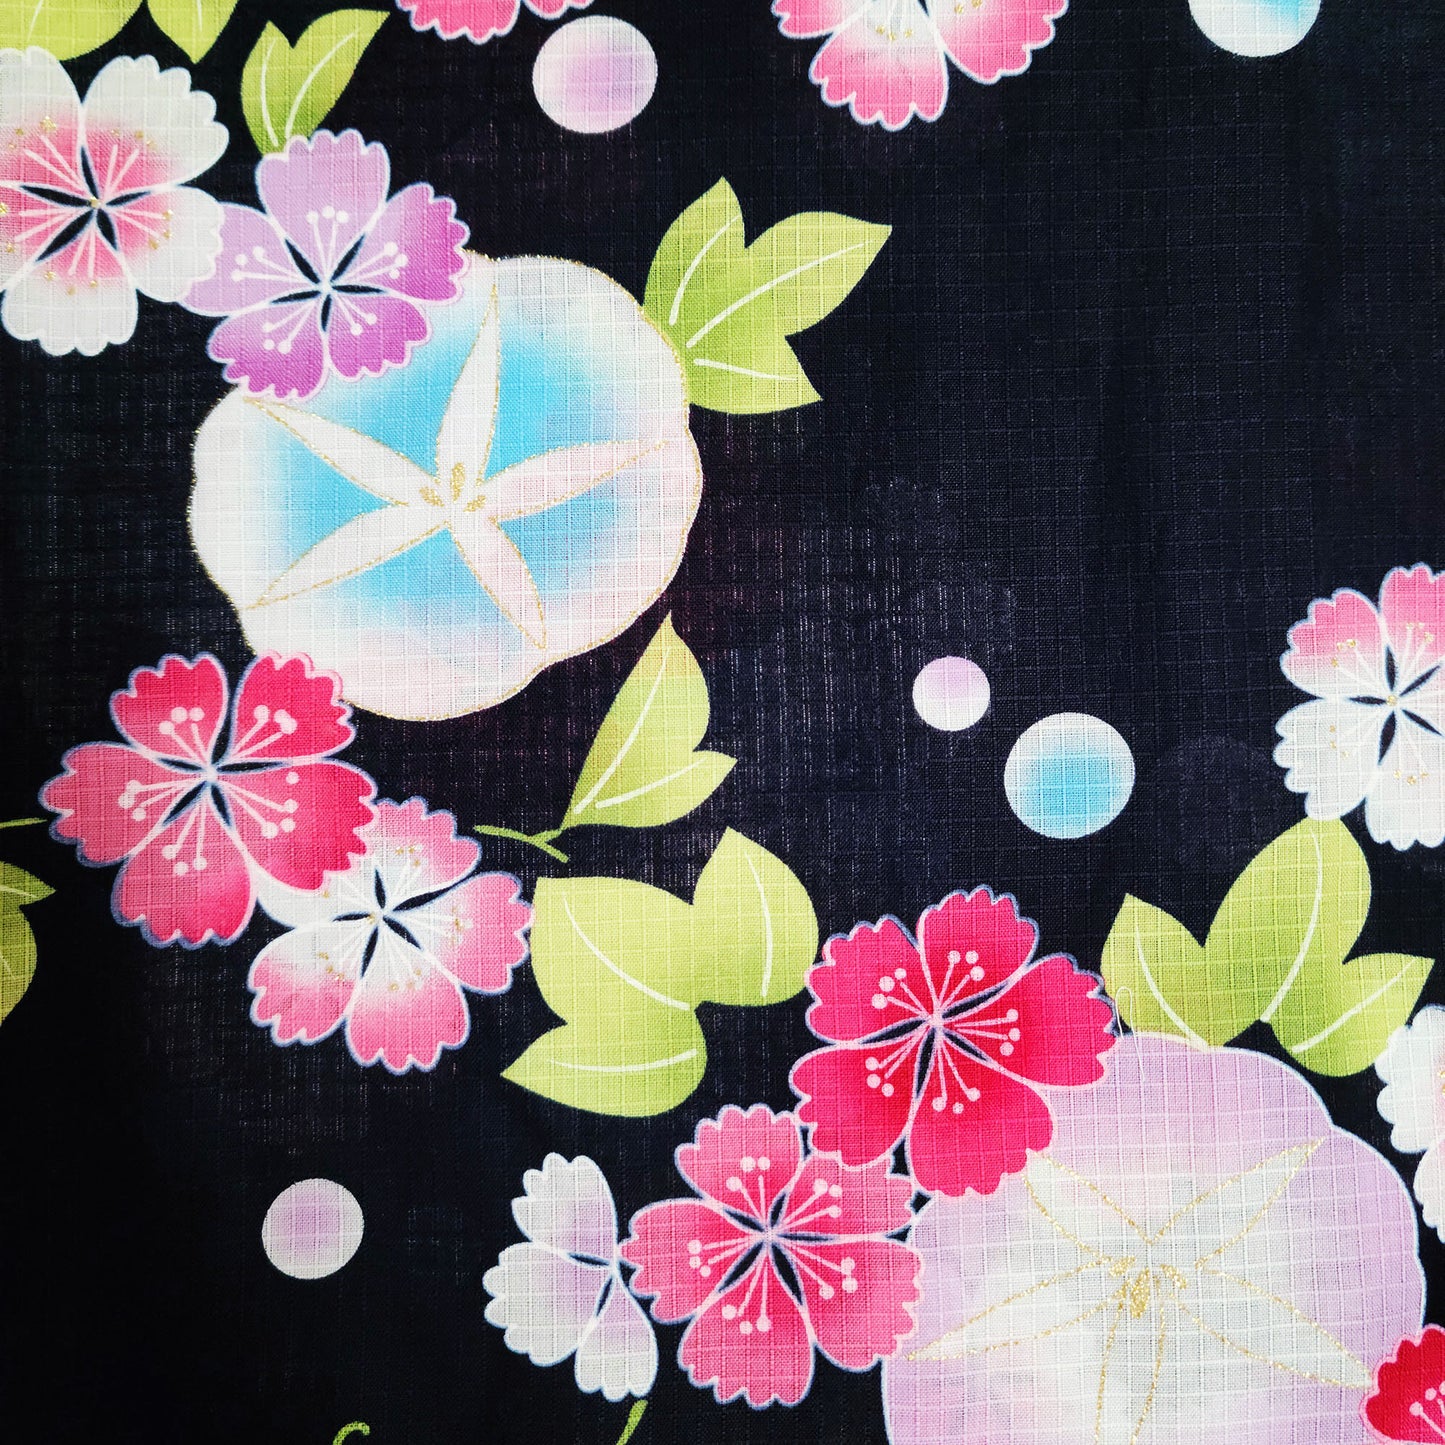 Yukata Kimono Gift Set - Colorful Morning Glory and Cherry Blossom in Black